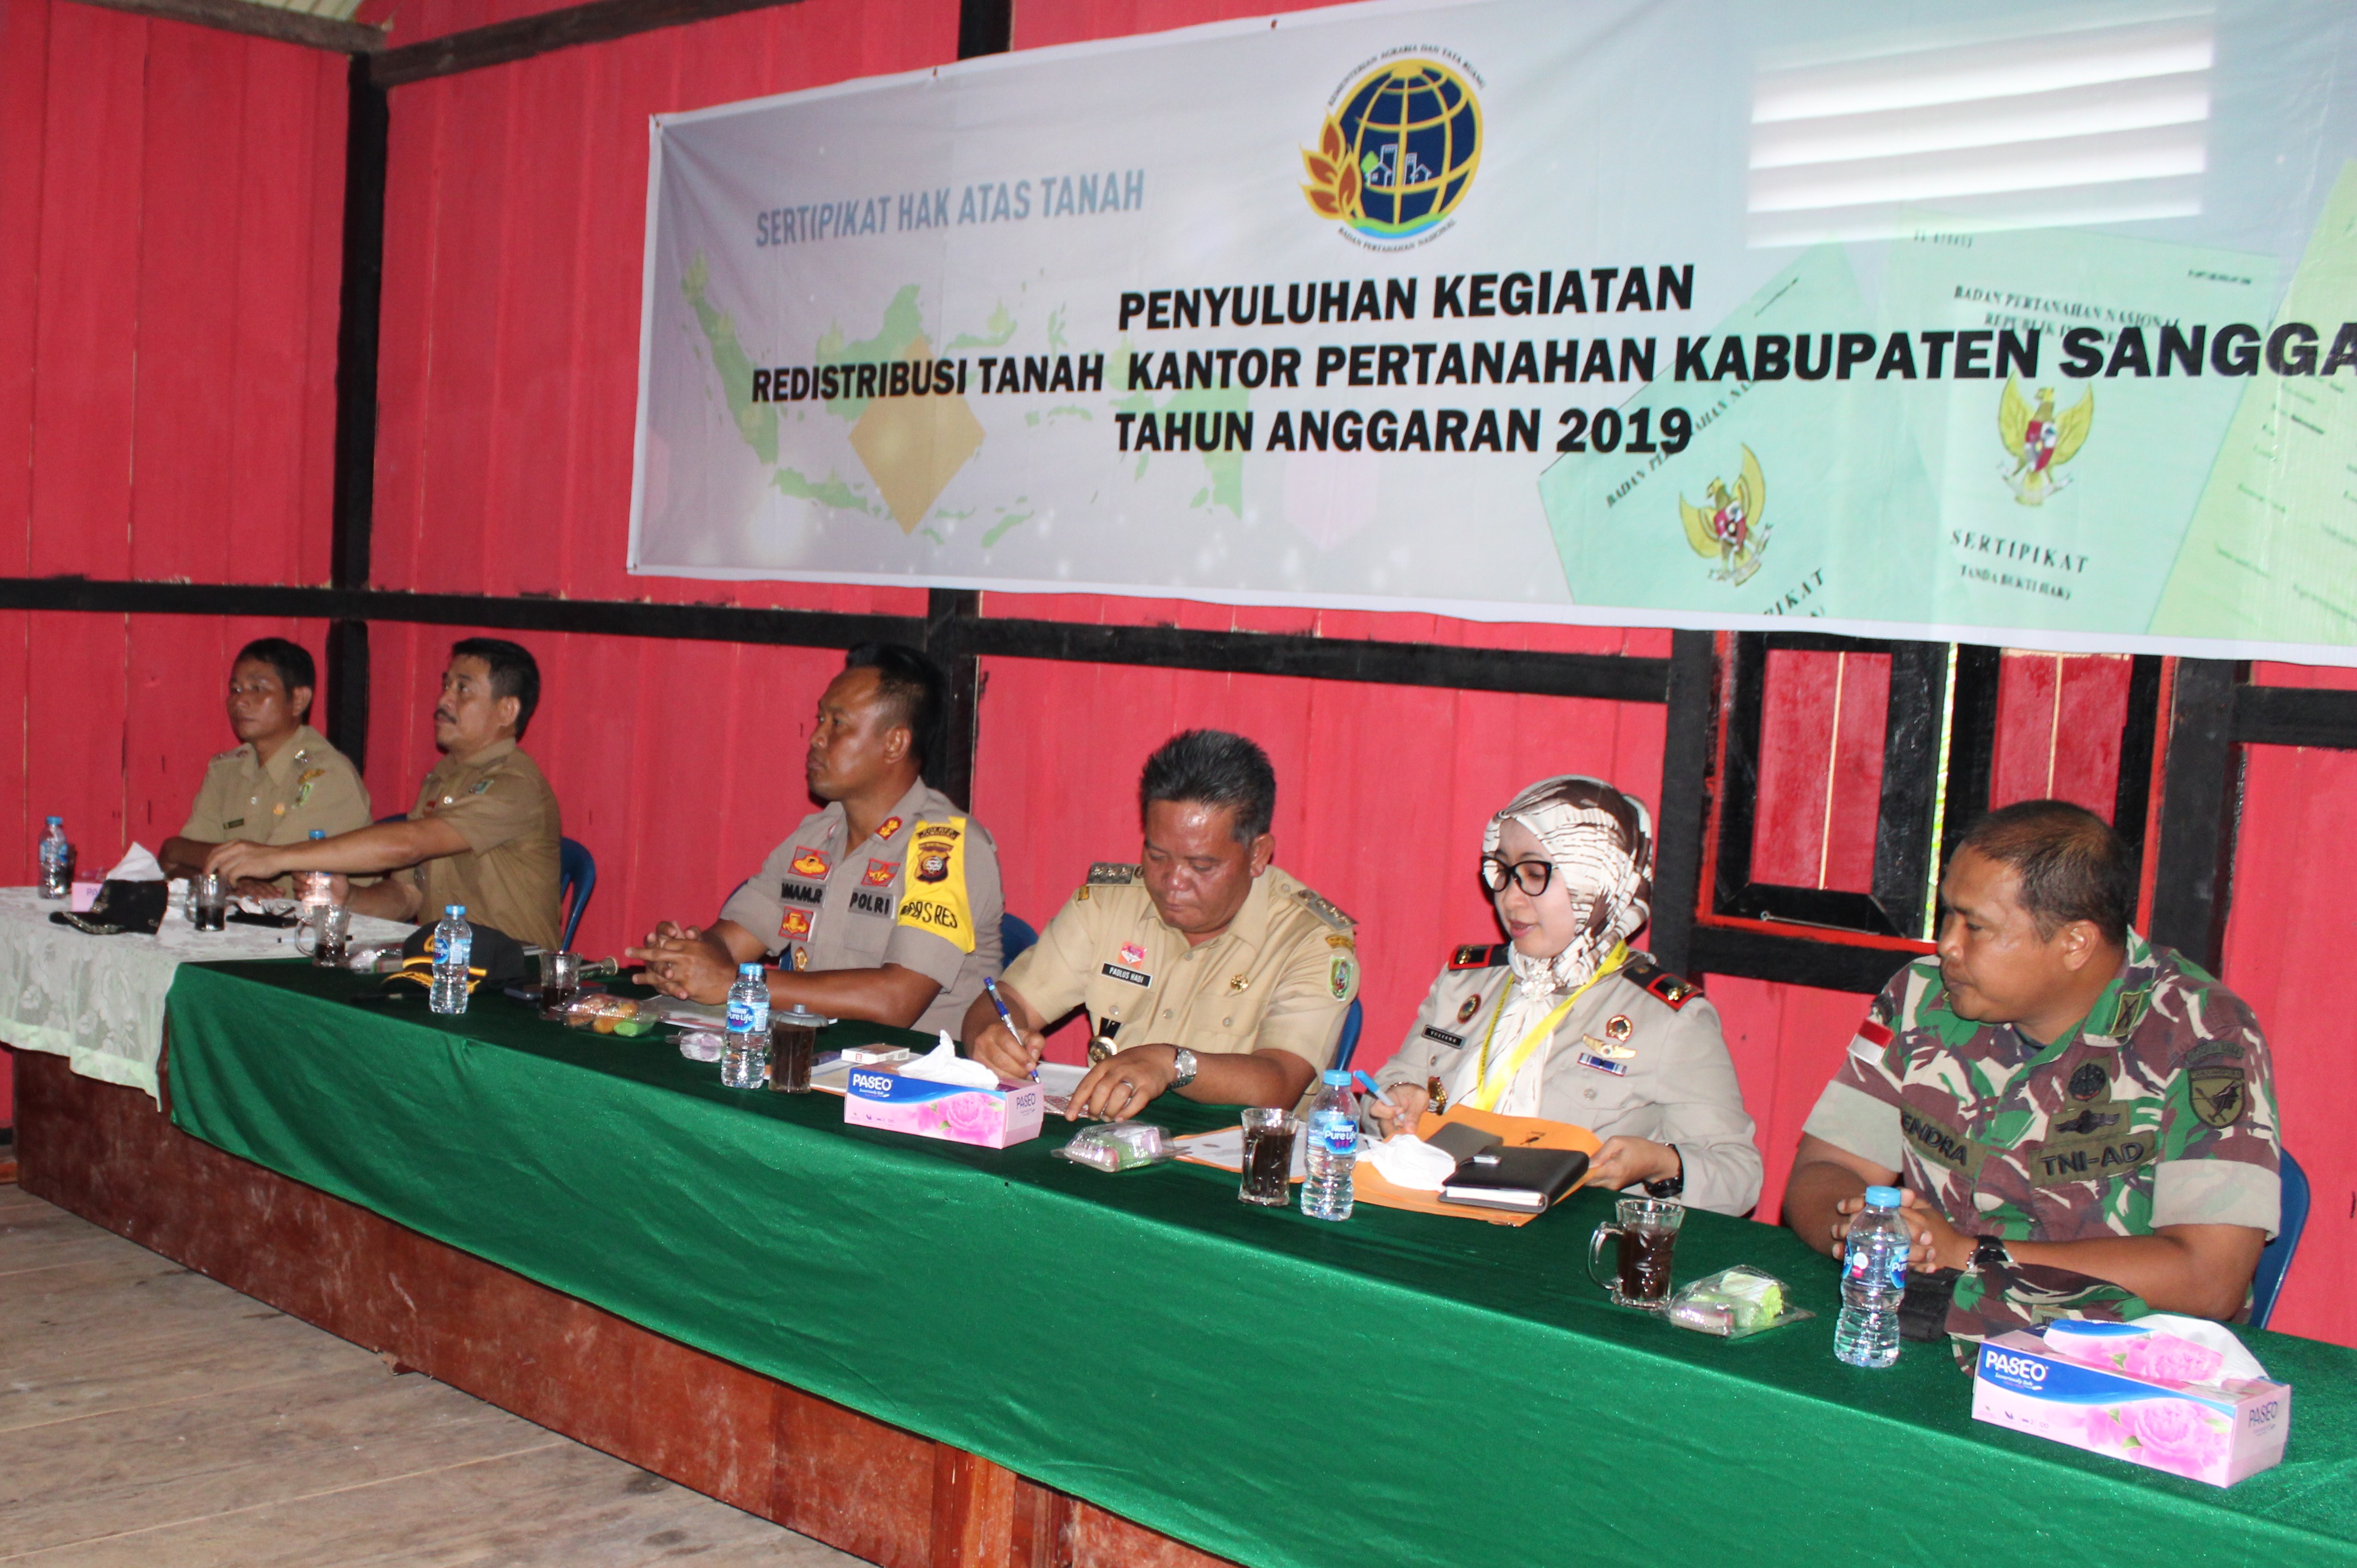 Kepala BPN Sanggau Yuliana, SH, M.Eng Memberikan Penyuluhan Tentang Redistribusi TORA Kepada Masyarakat Desa Mandong